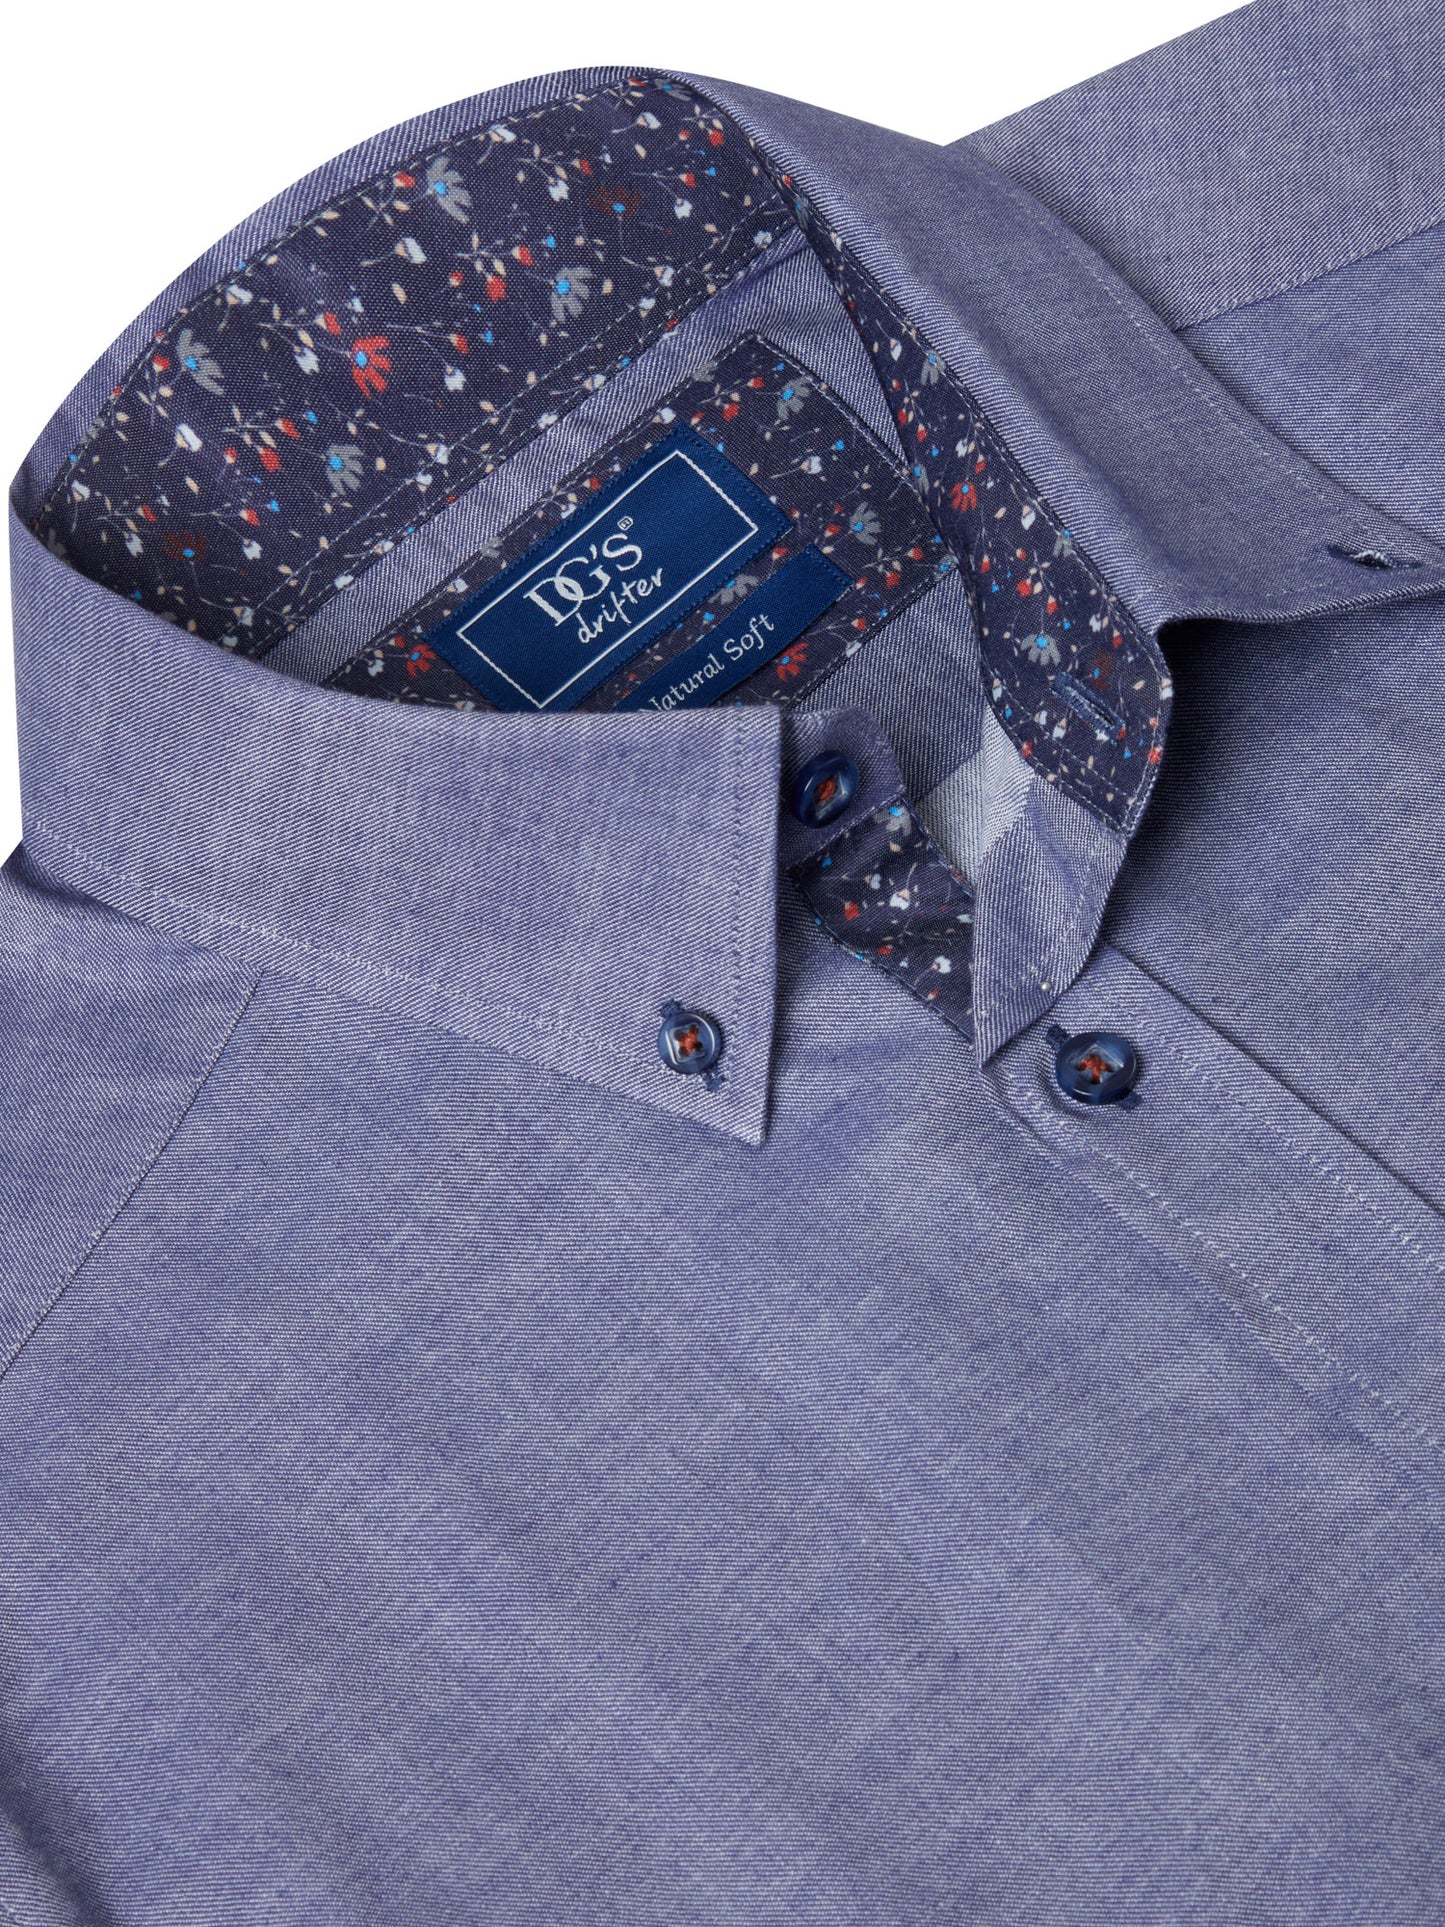 Pure Cotton Button-Down Long-Sleeve Shirt - Blue Shadow